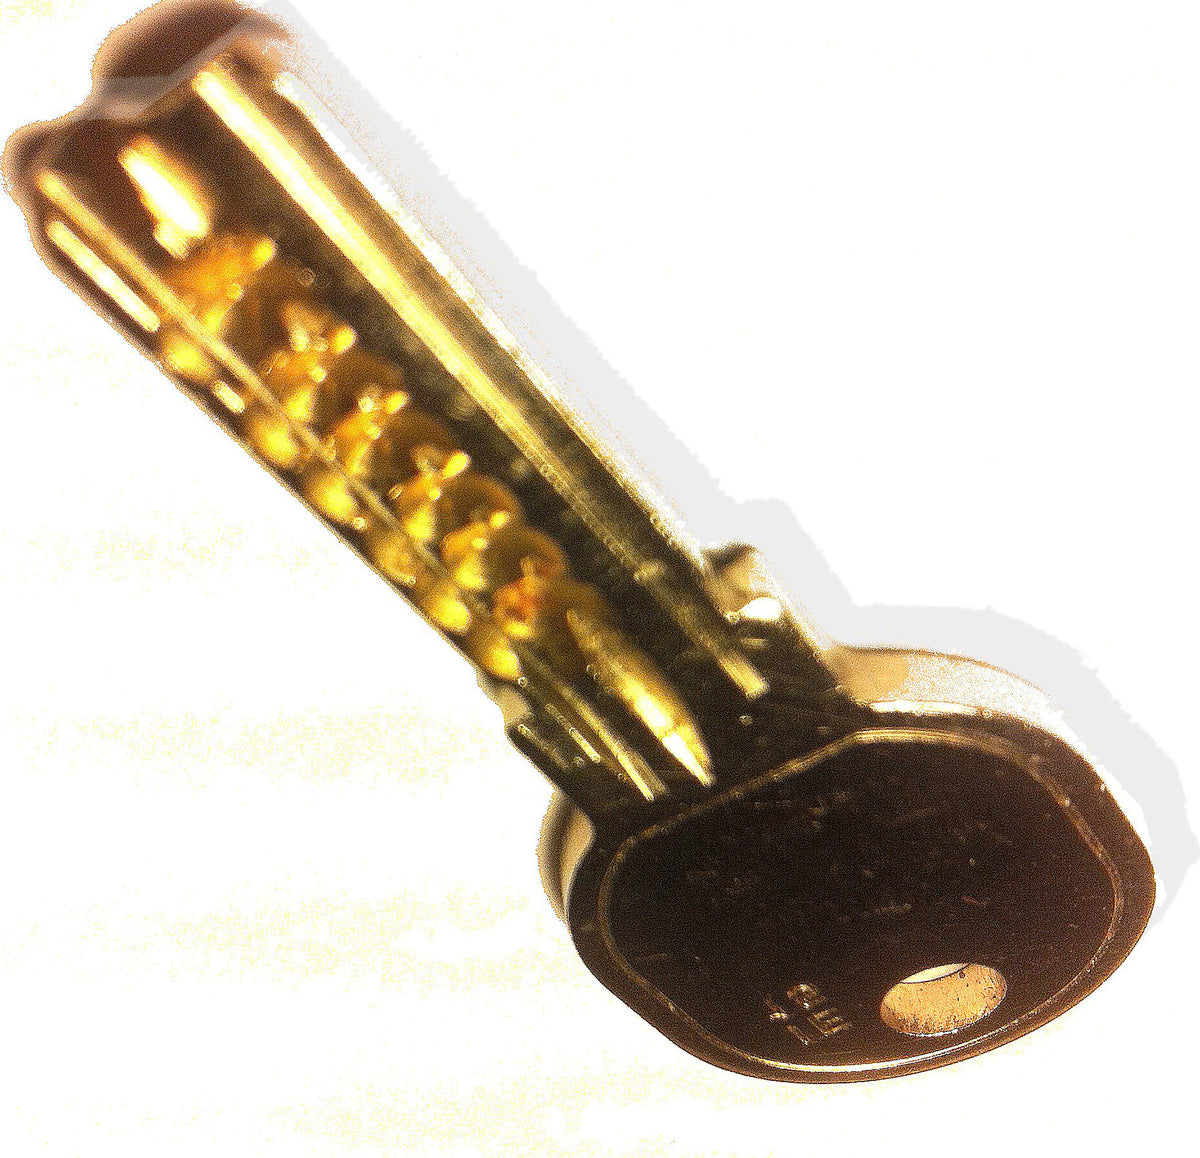 Dimple pin key - bump key - ISEO R6-B36305